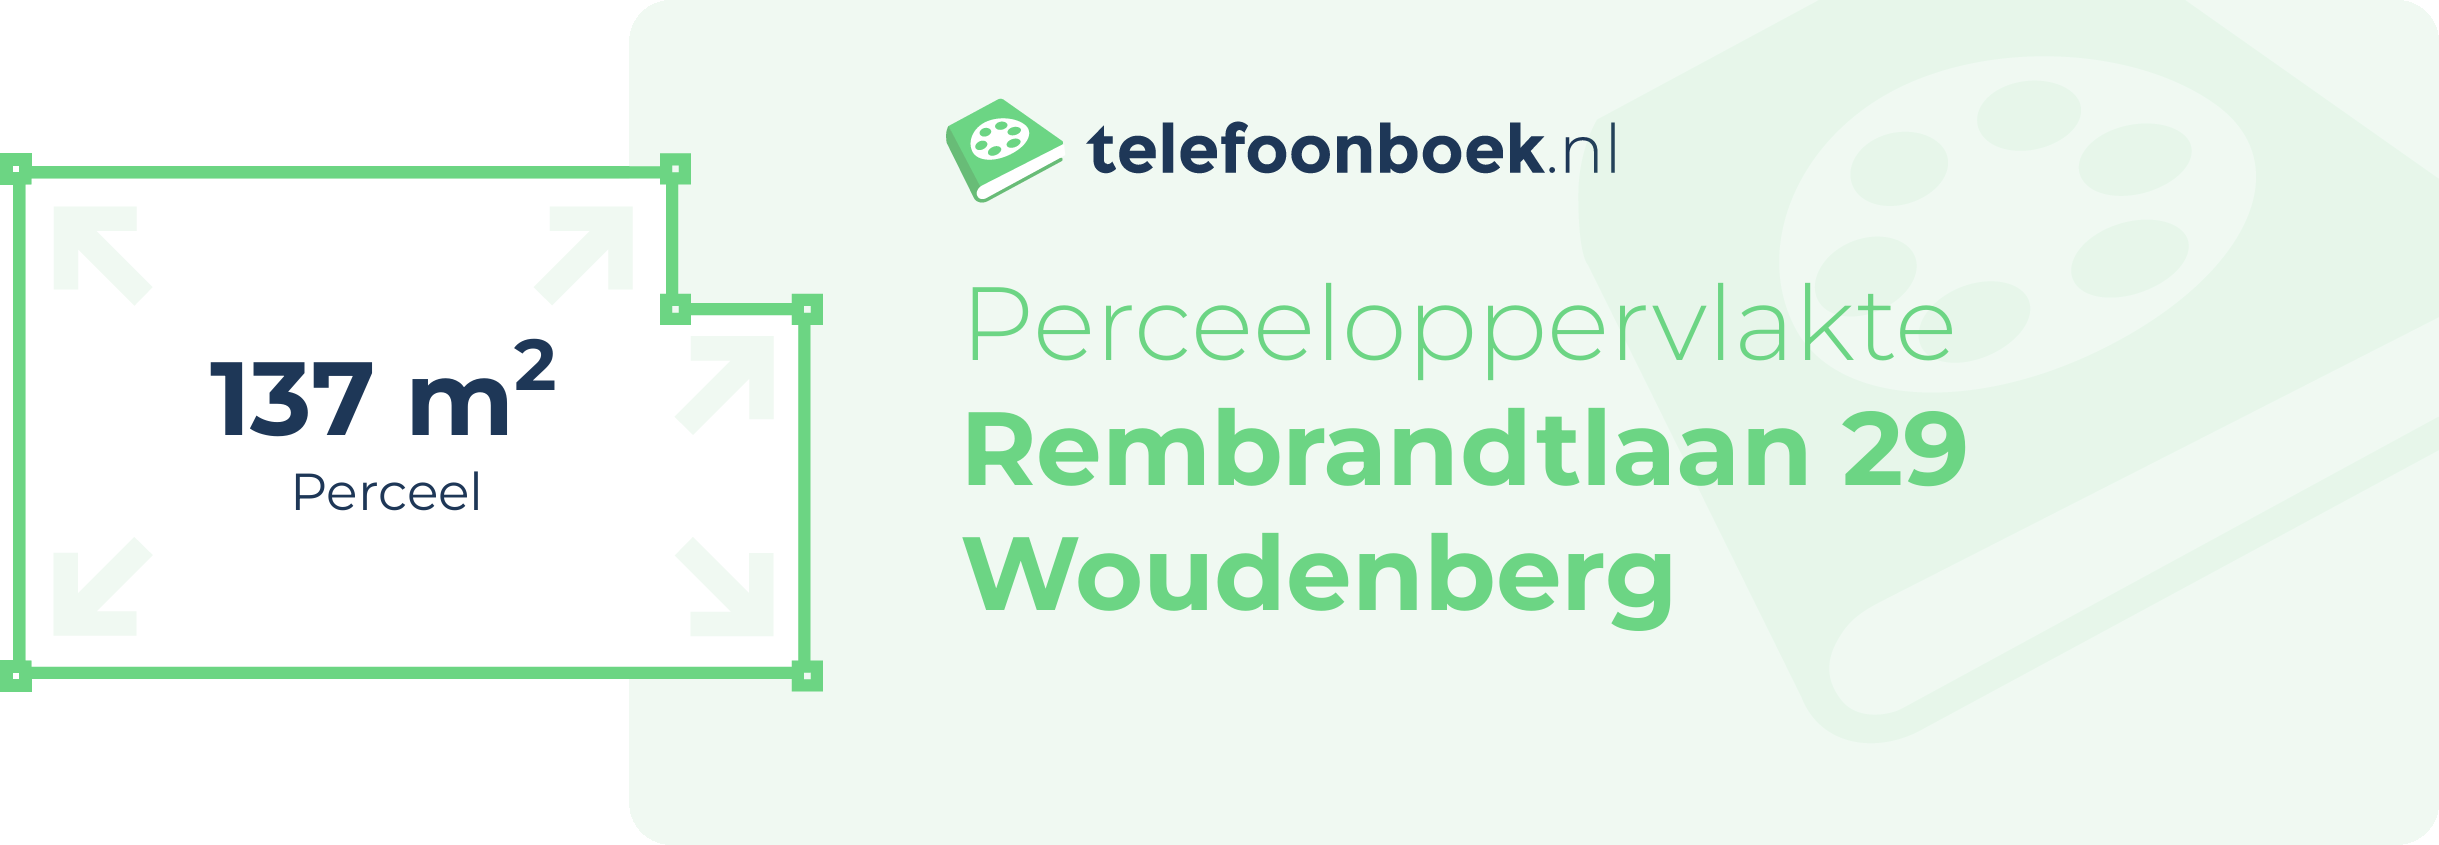 Perceeloppervlakte Rembrandtlaan 29 Woudenberg